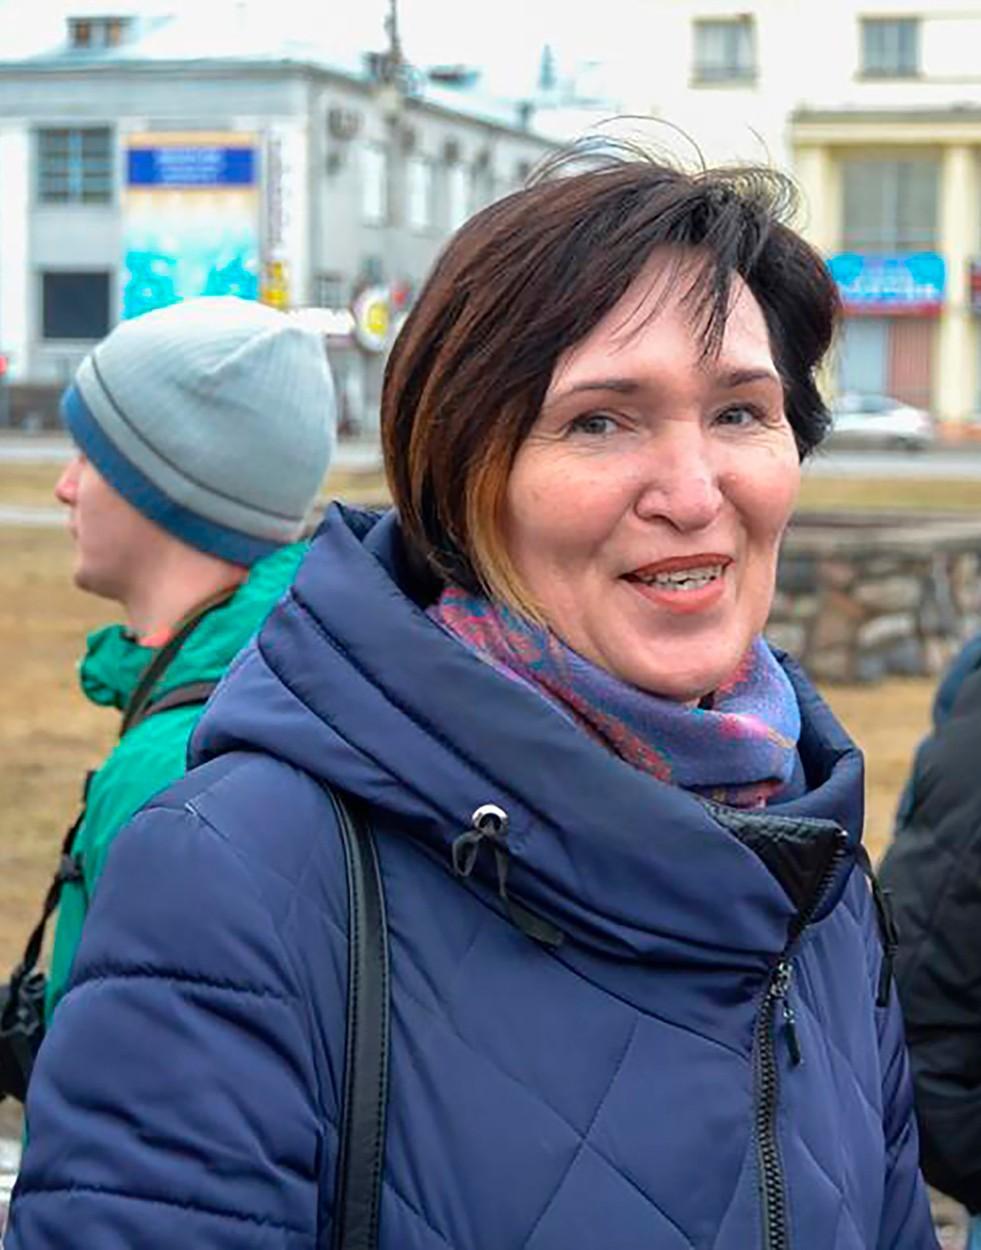 Yelena Kalinina este o activistă anti-Putin din Rusia